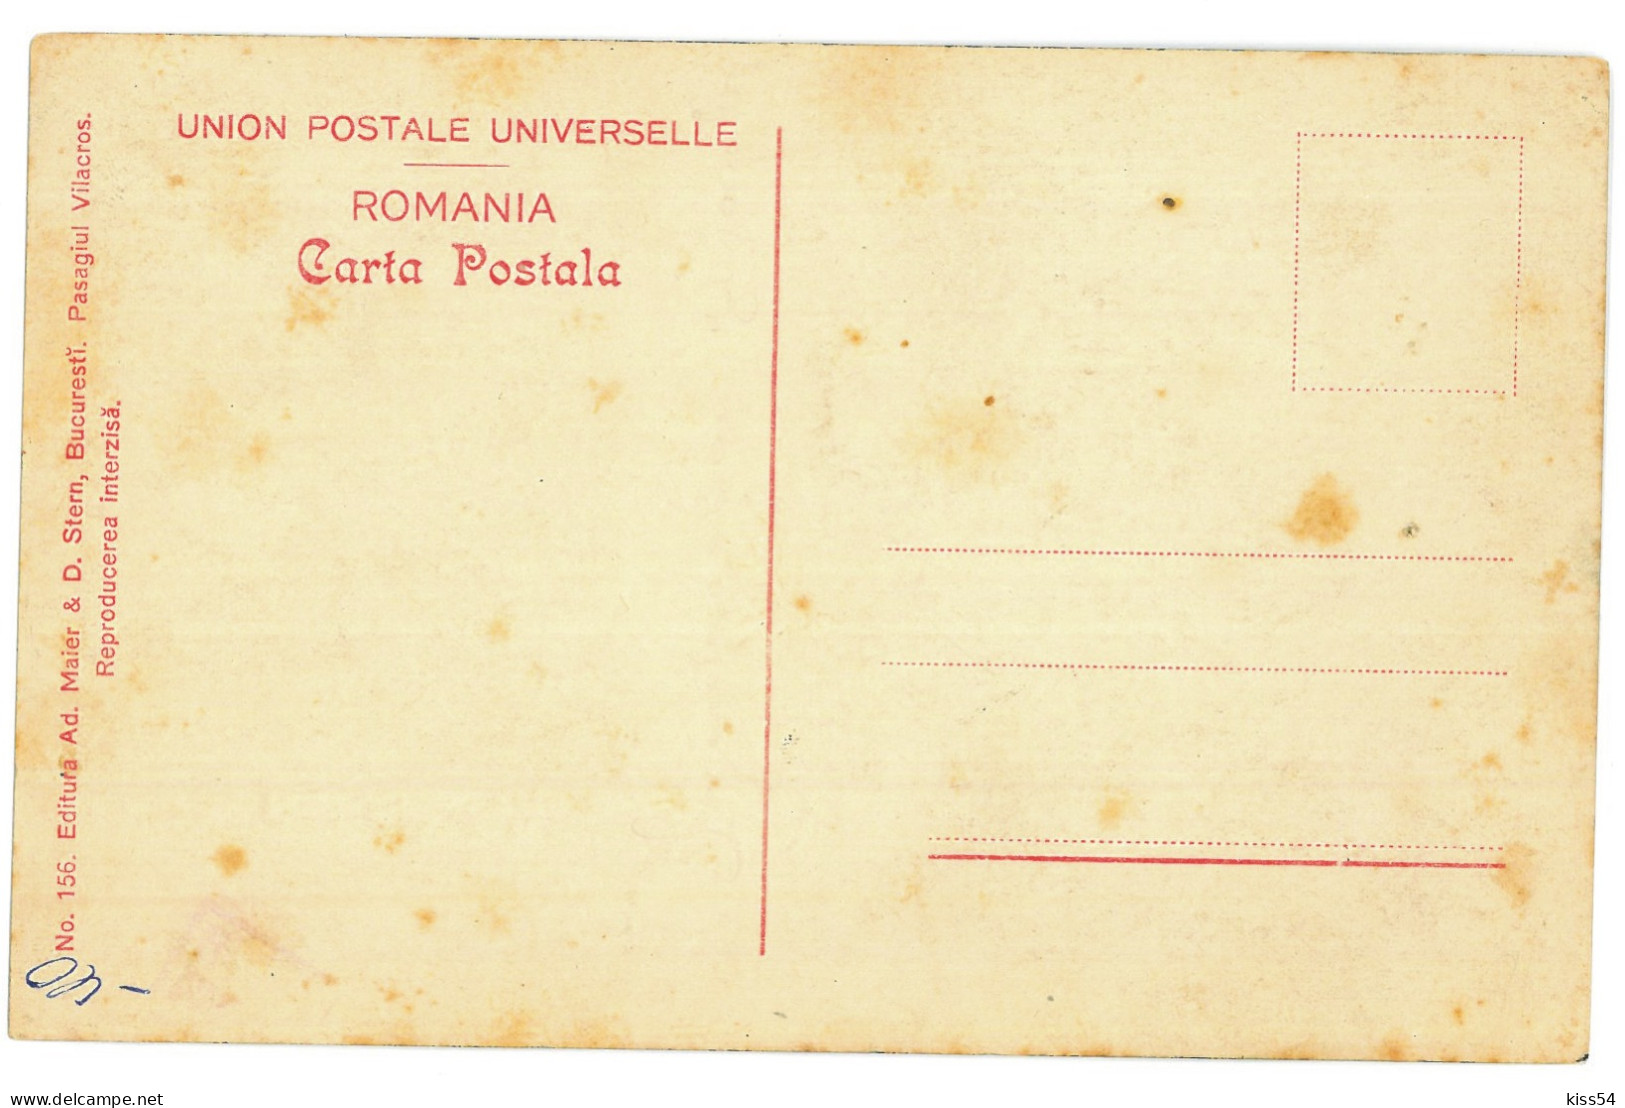 RO 89 - 24289 GYPSY, Tiganca, Romania - Old Postcard - Unused - Roemenië